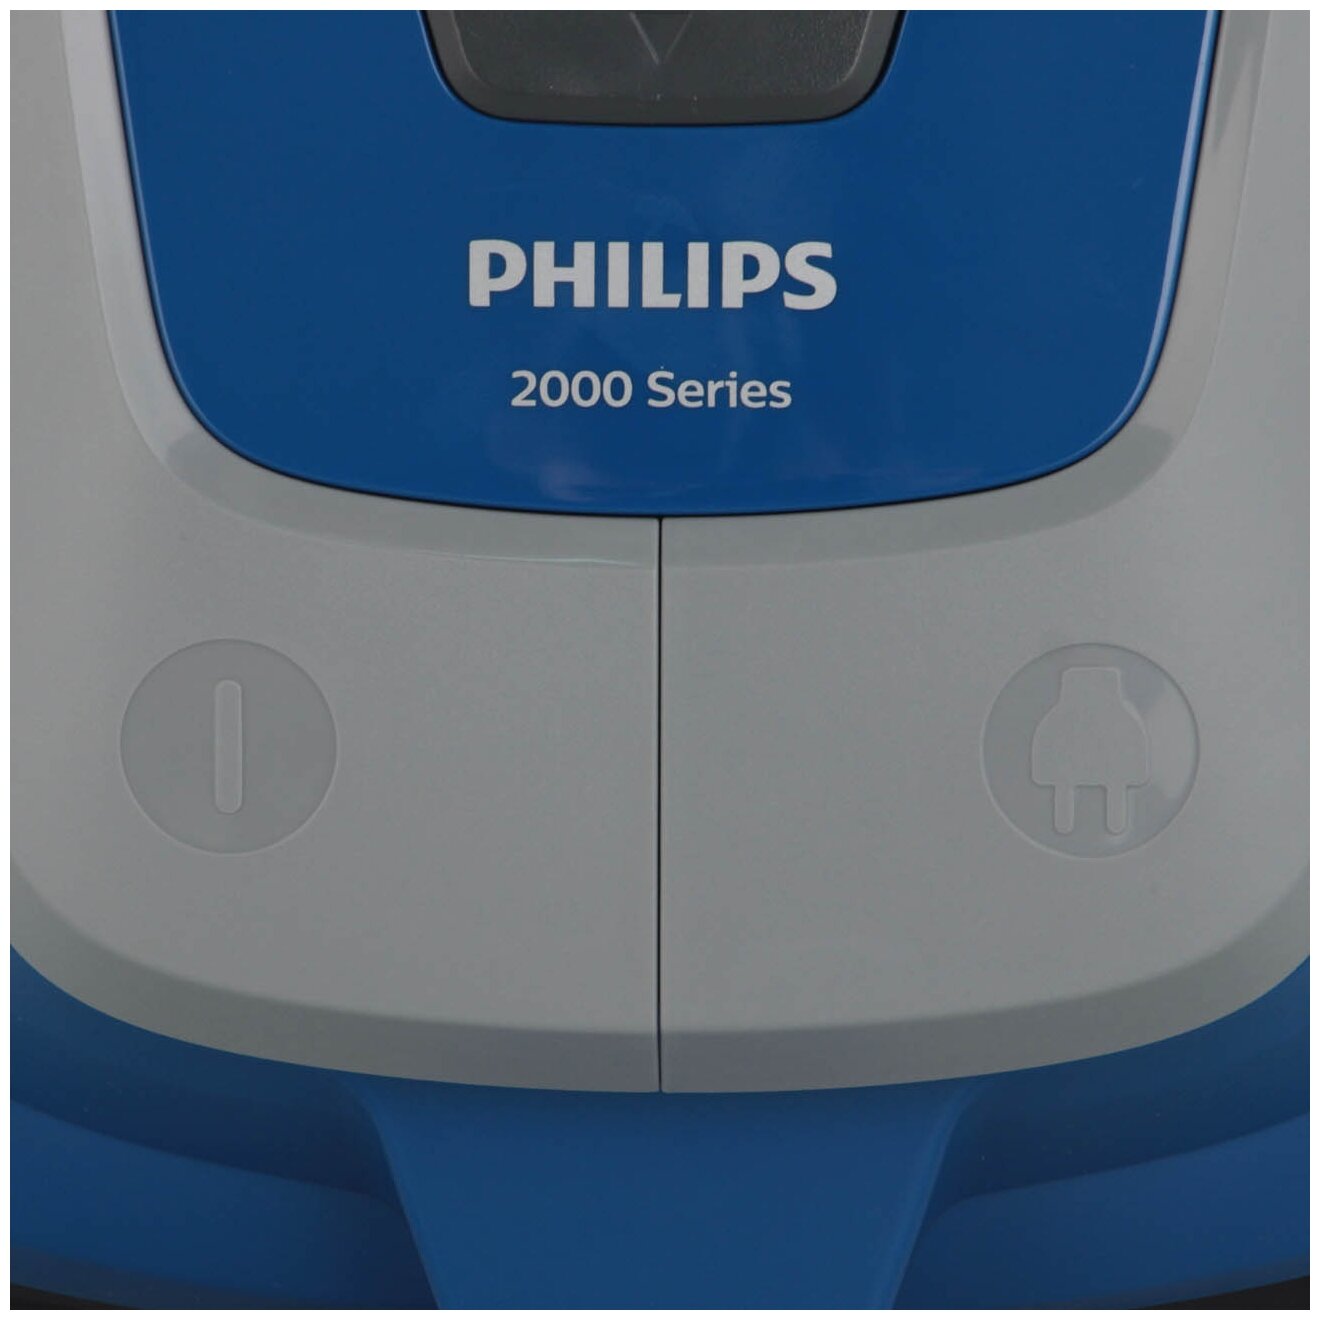 Пылесос philips 2000 series. Пылесос Philips xb2062/01. Philips xb2022/xb2023. Пылесос Philips xb2022. Пылесос с контейнером для пыли Philips xb2062/01.